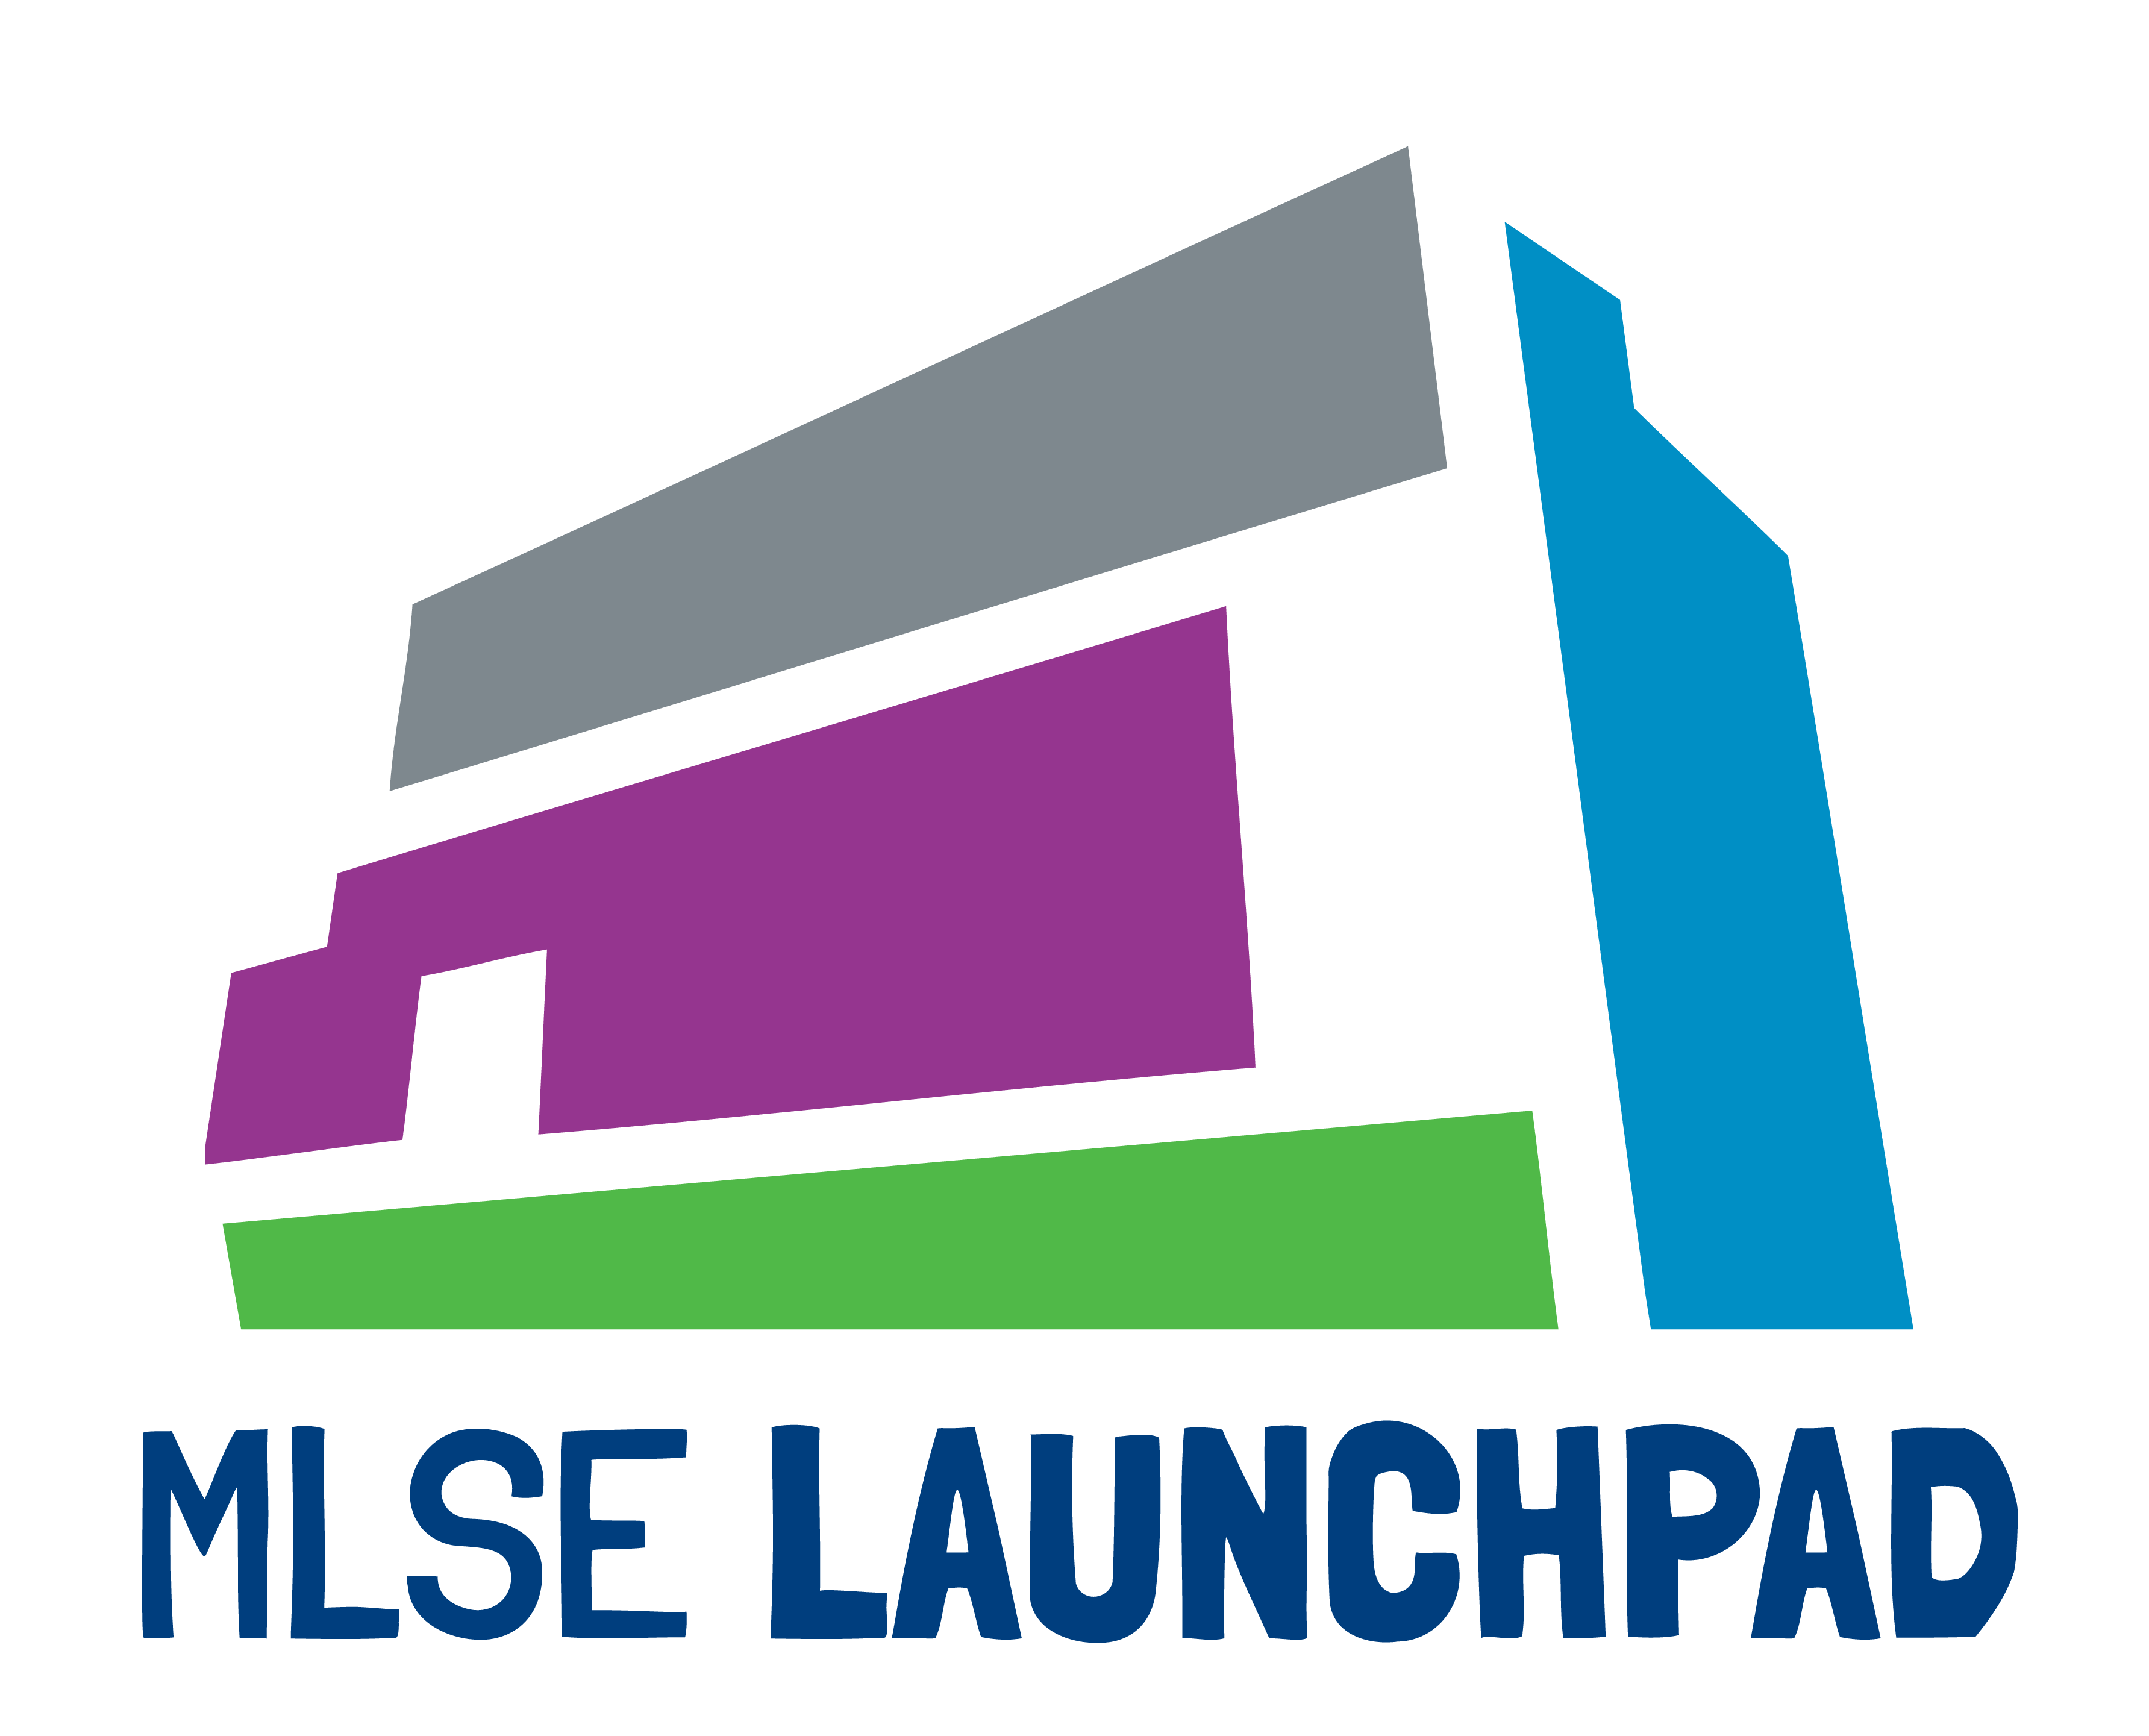 MLSE Launchpad Logo[8]